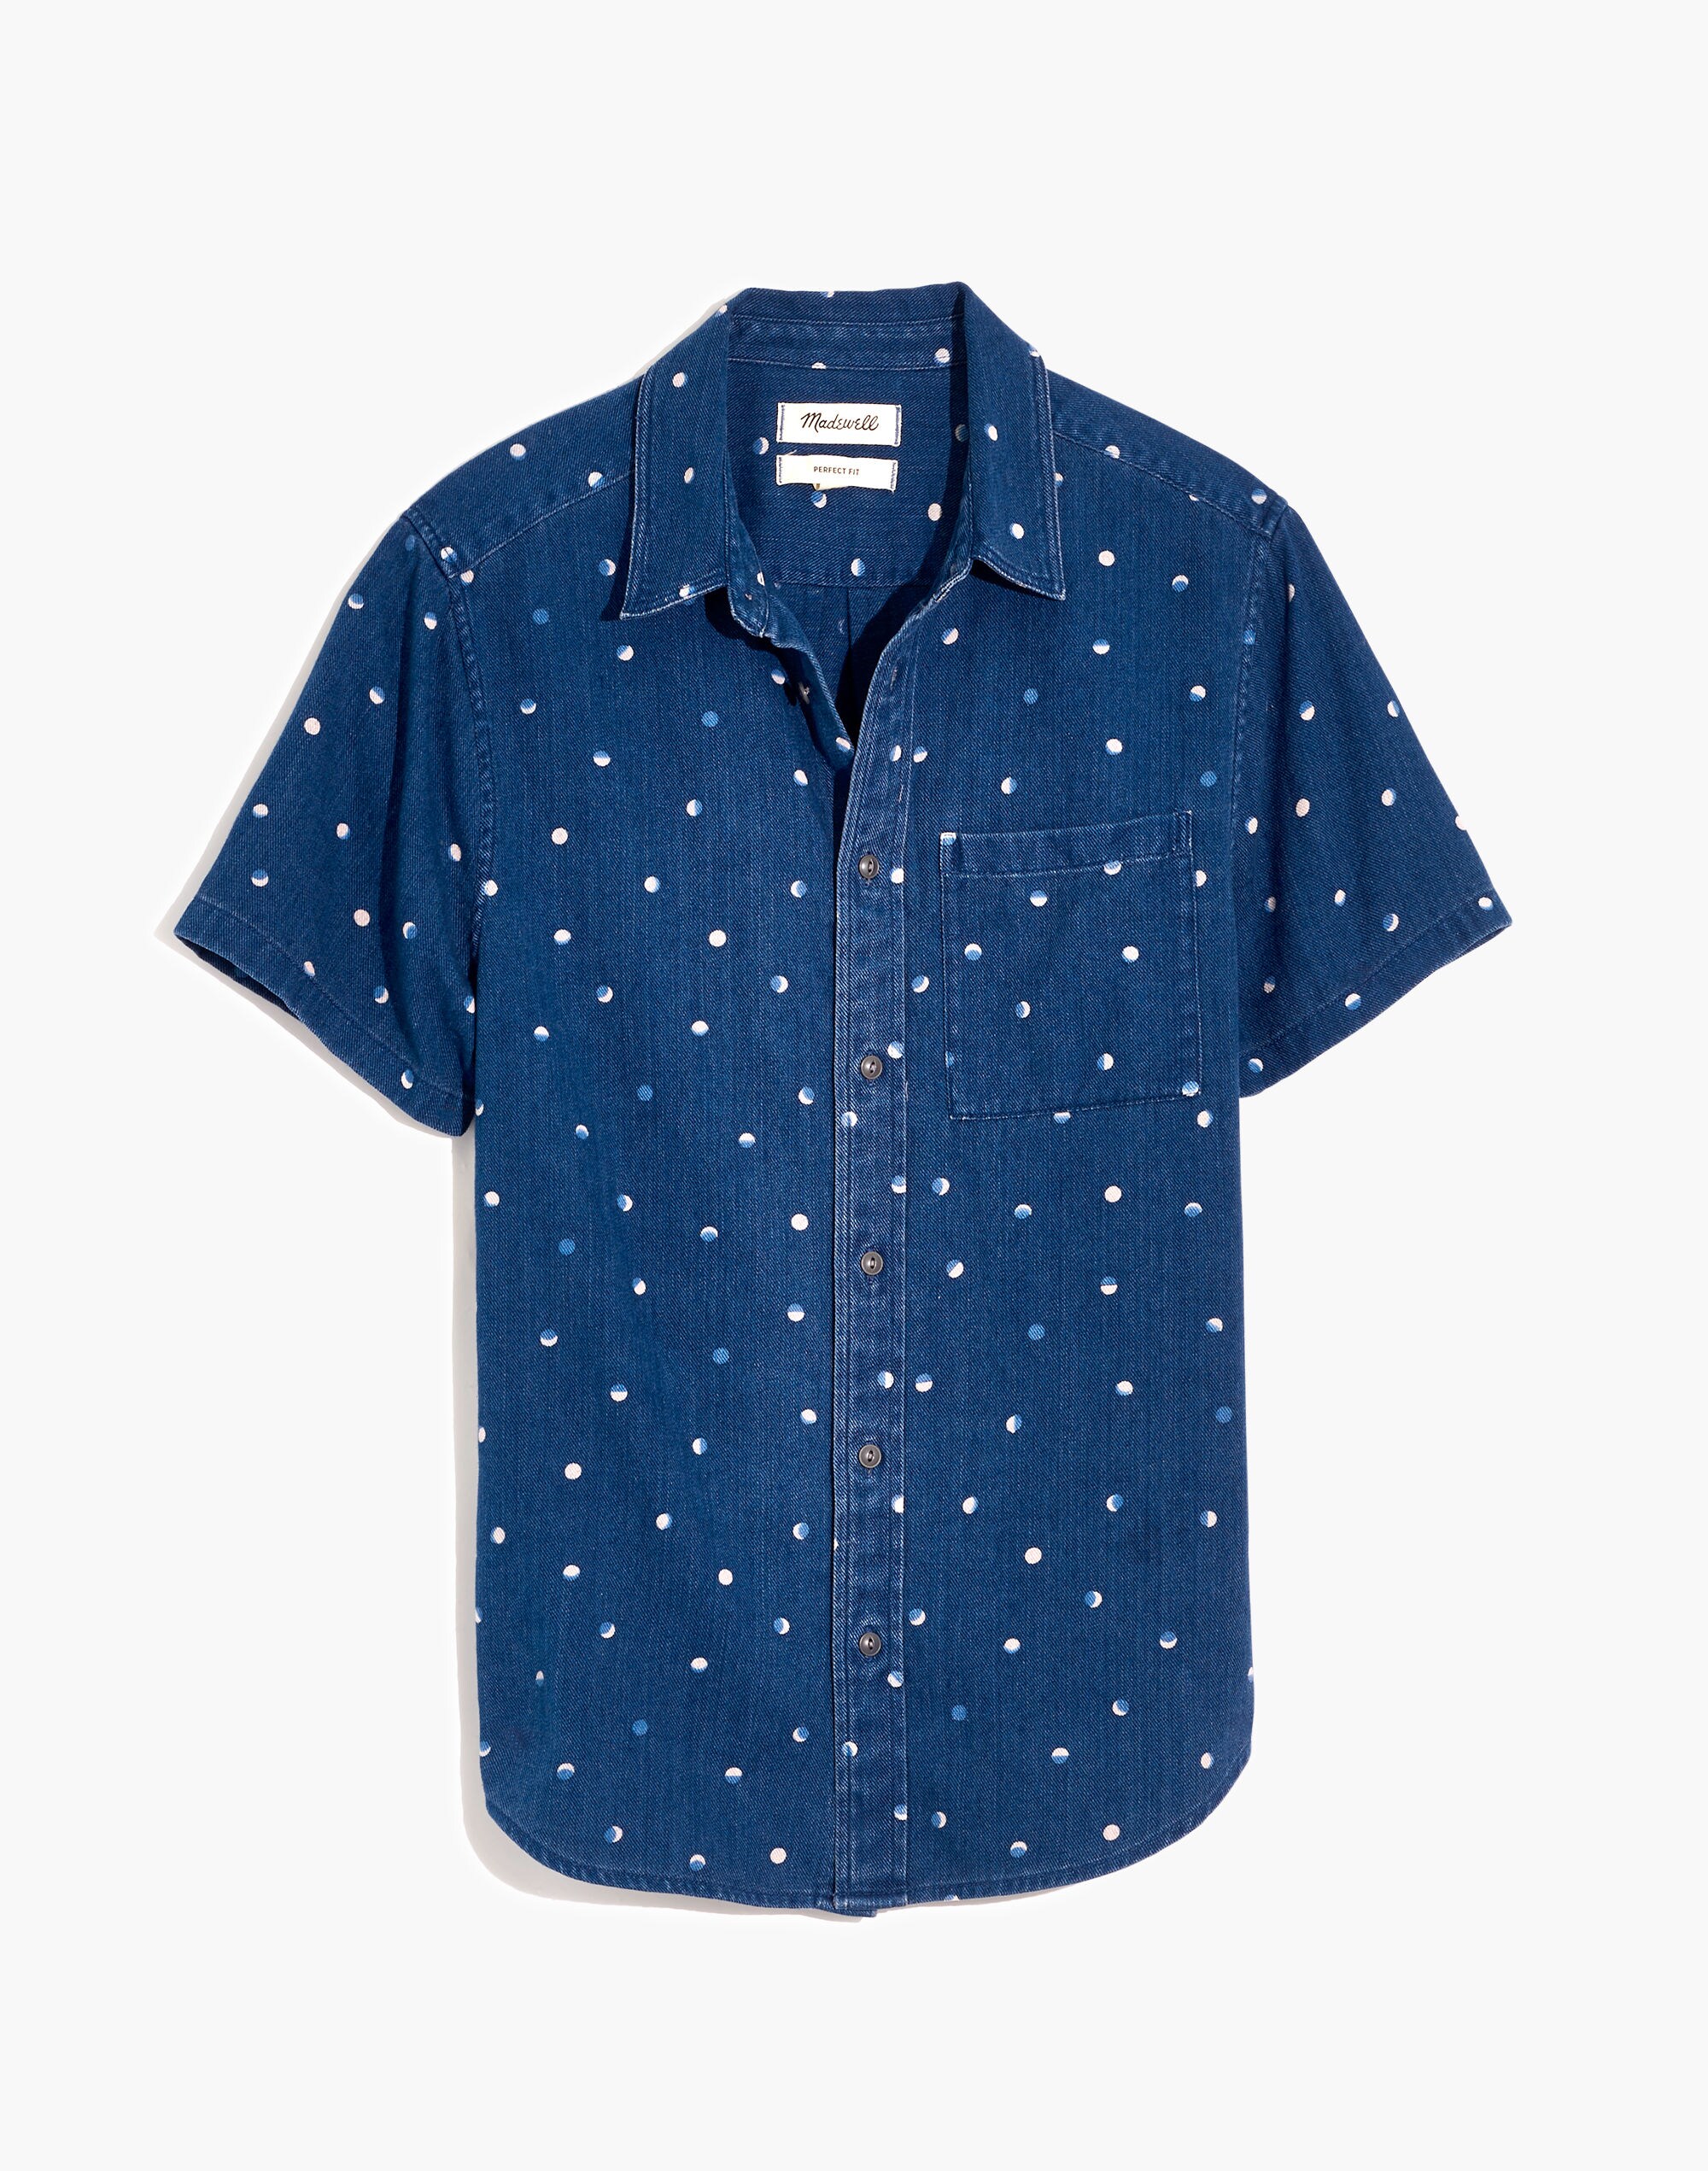 Perfect Short-Sleeve Shirt in Indigo Moon Print